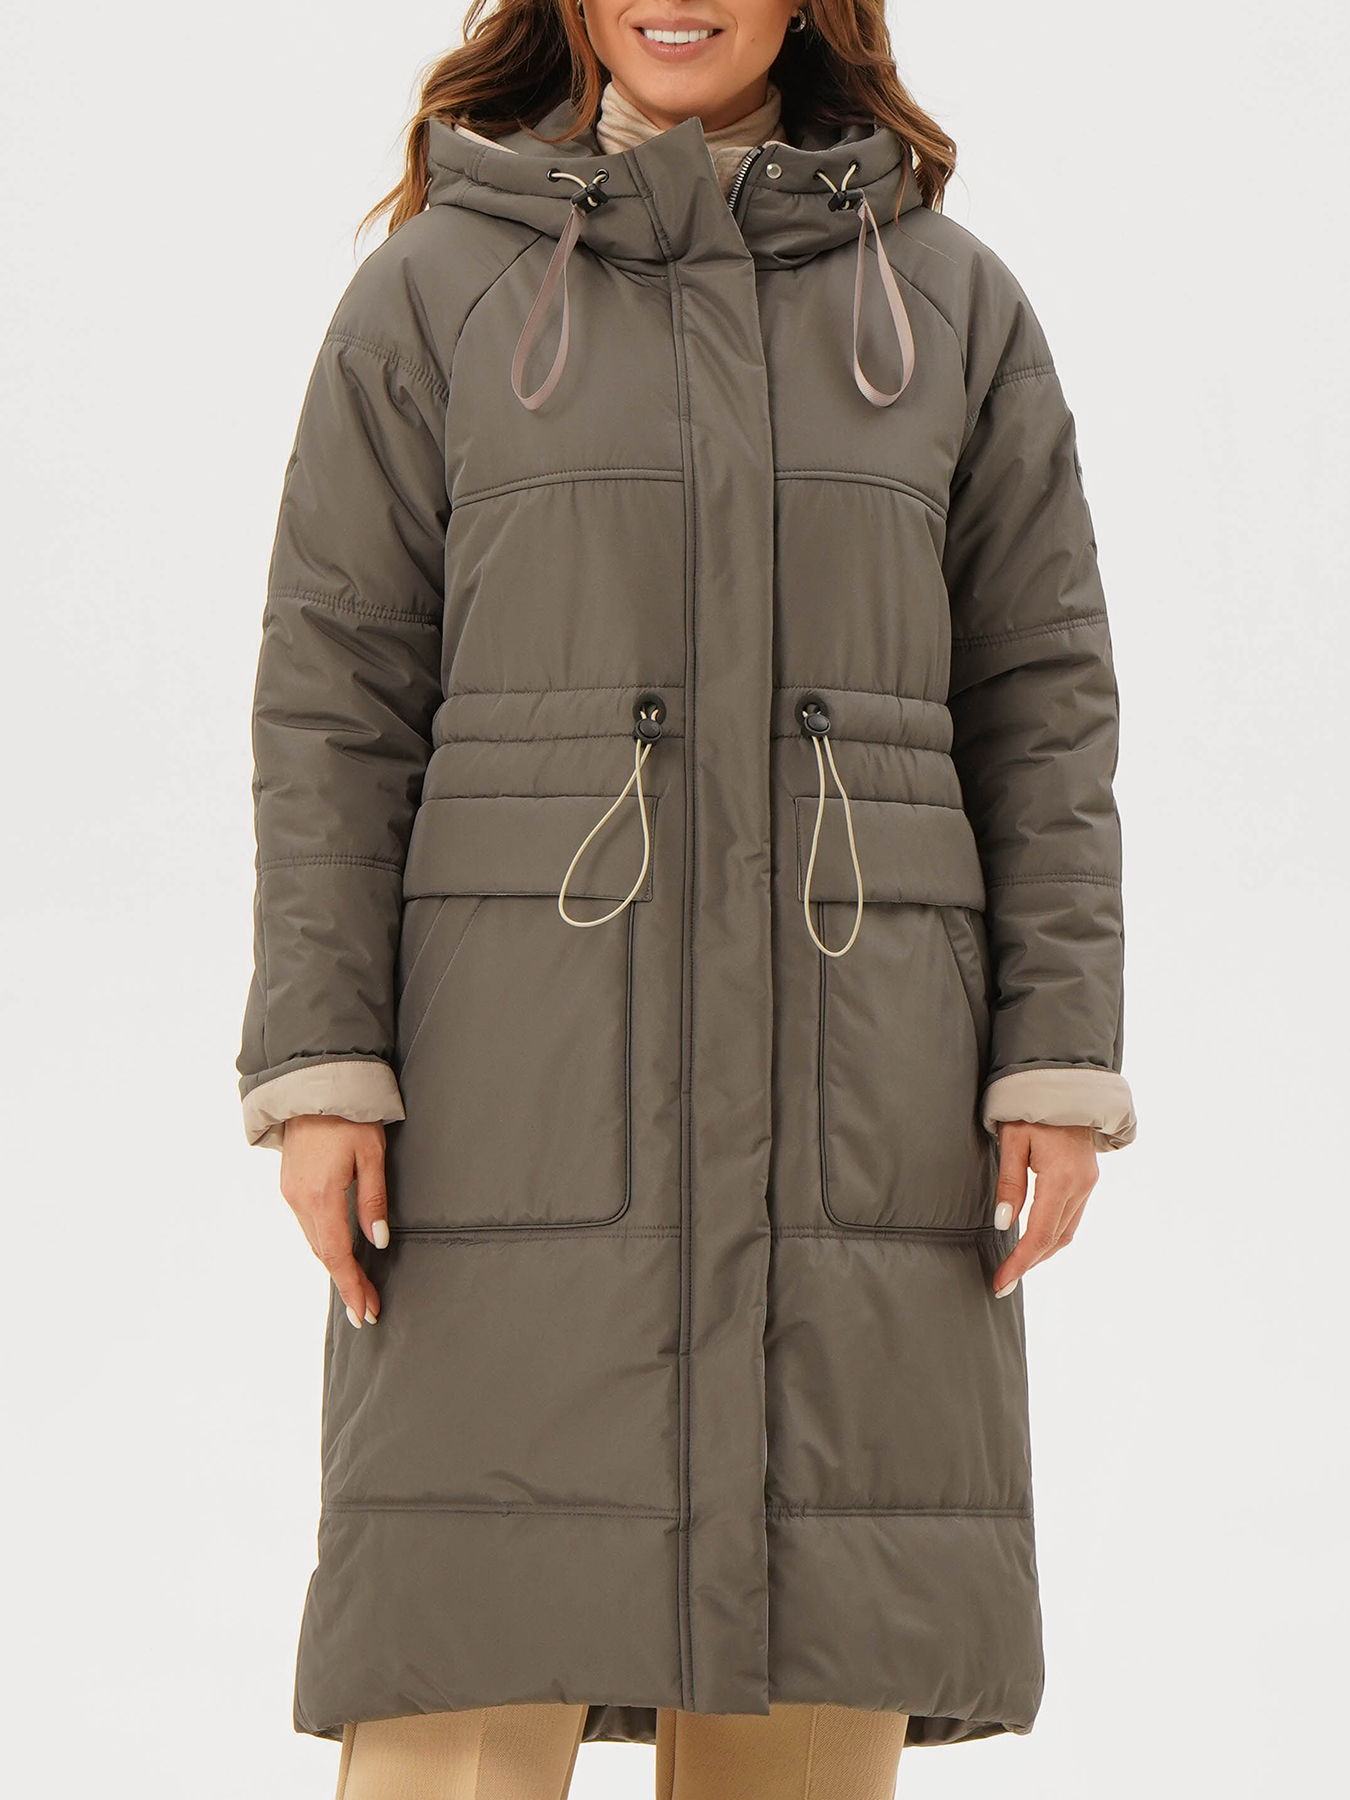 Пальто зимнее Maritta 433583-023, цвет хаки, размер 50 - фото 1